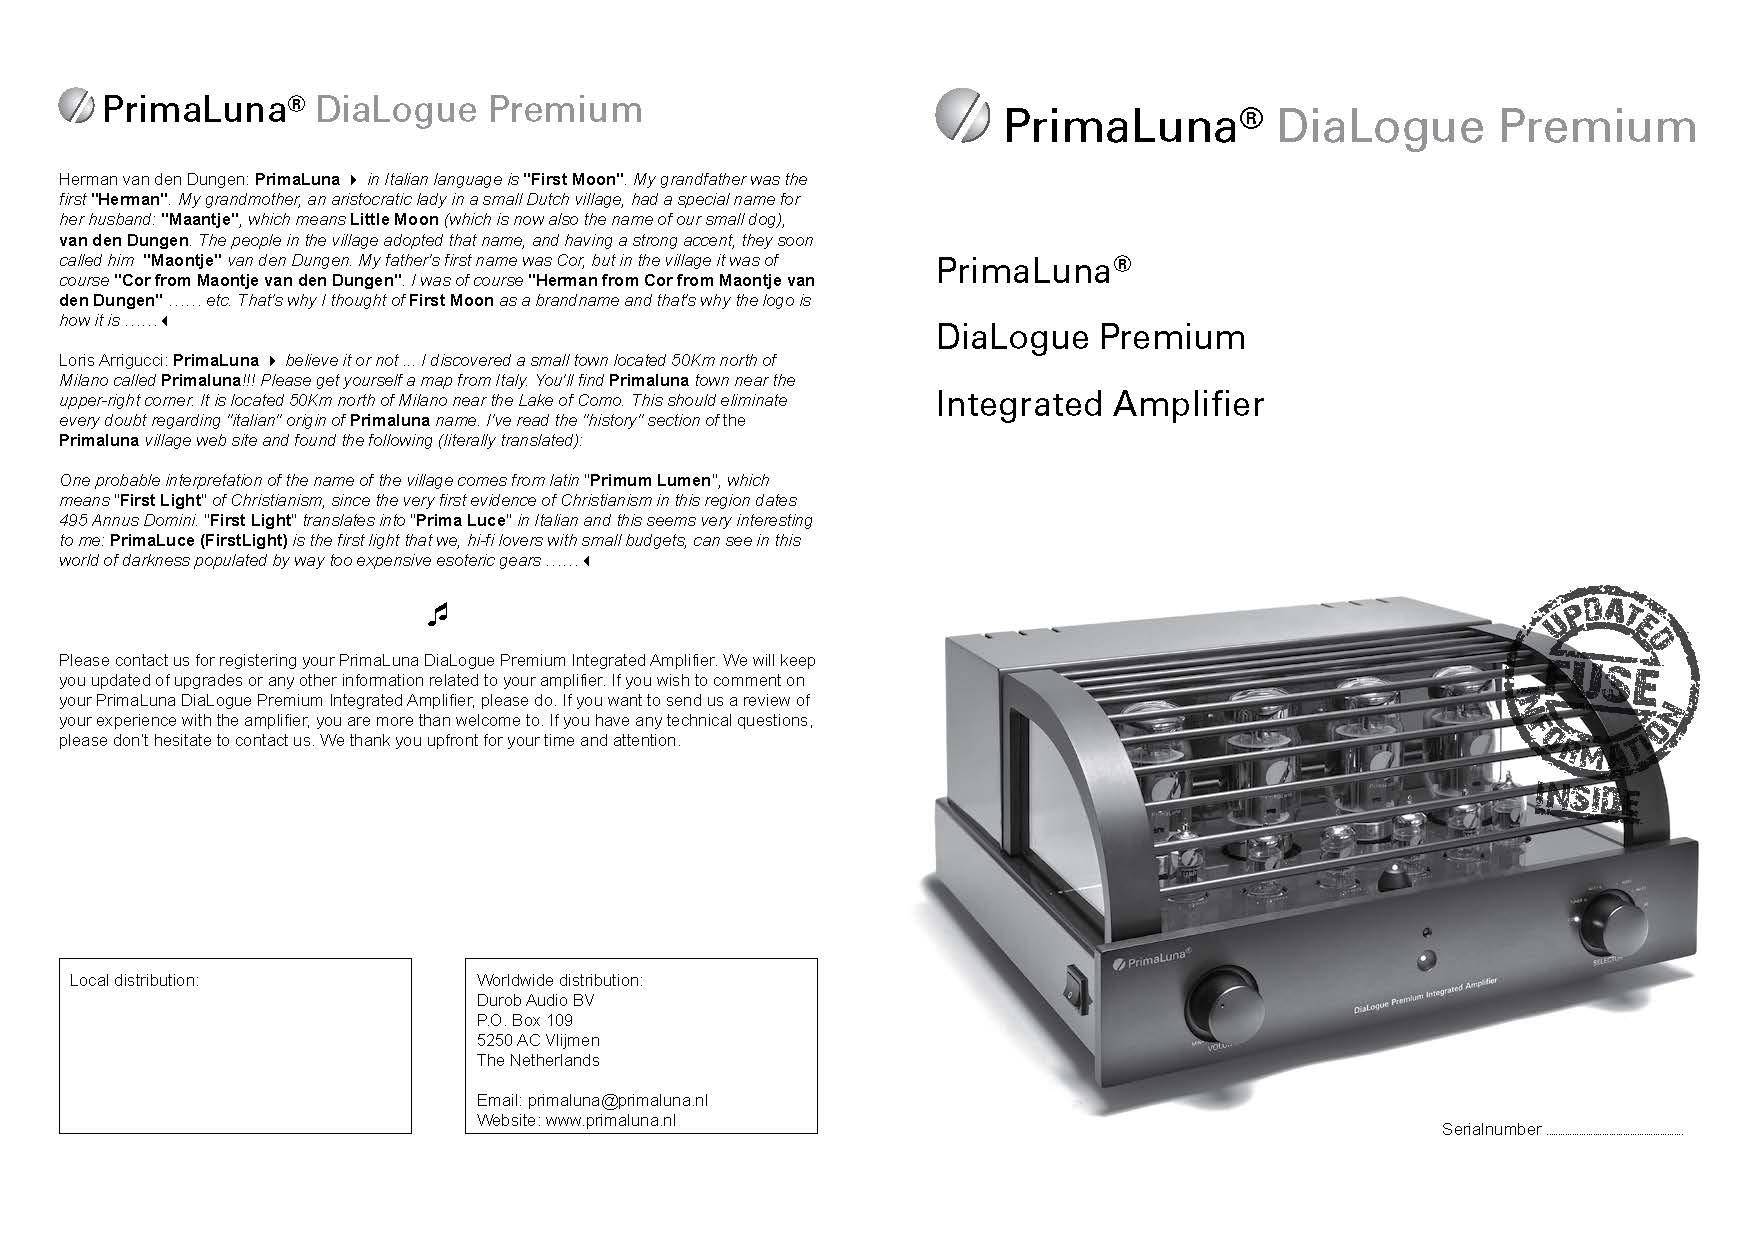 PrimaLuna Dialogue Premium Integrated Amplifier User Manual